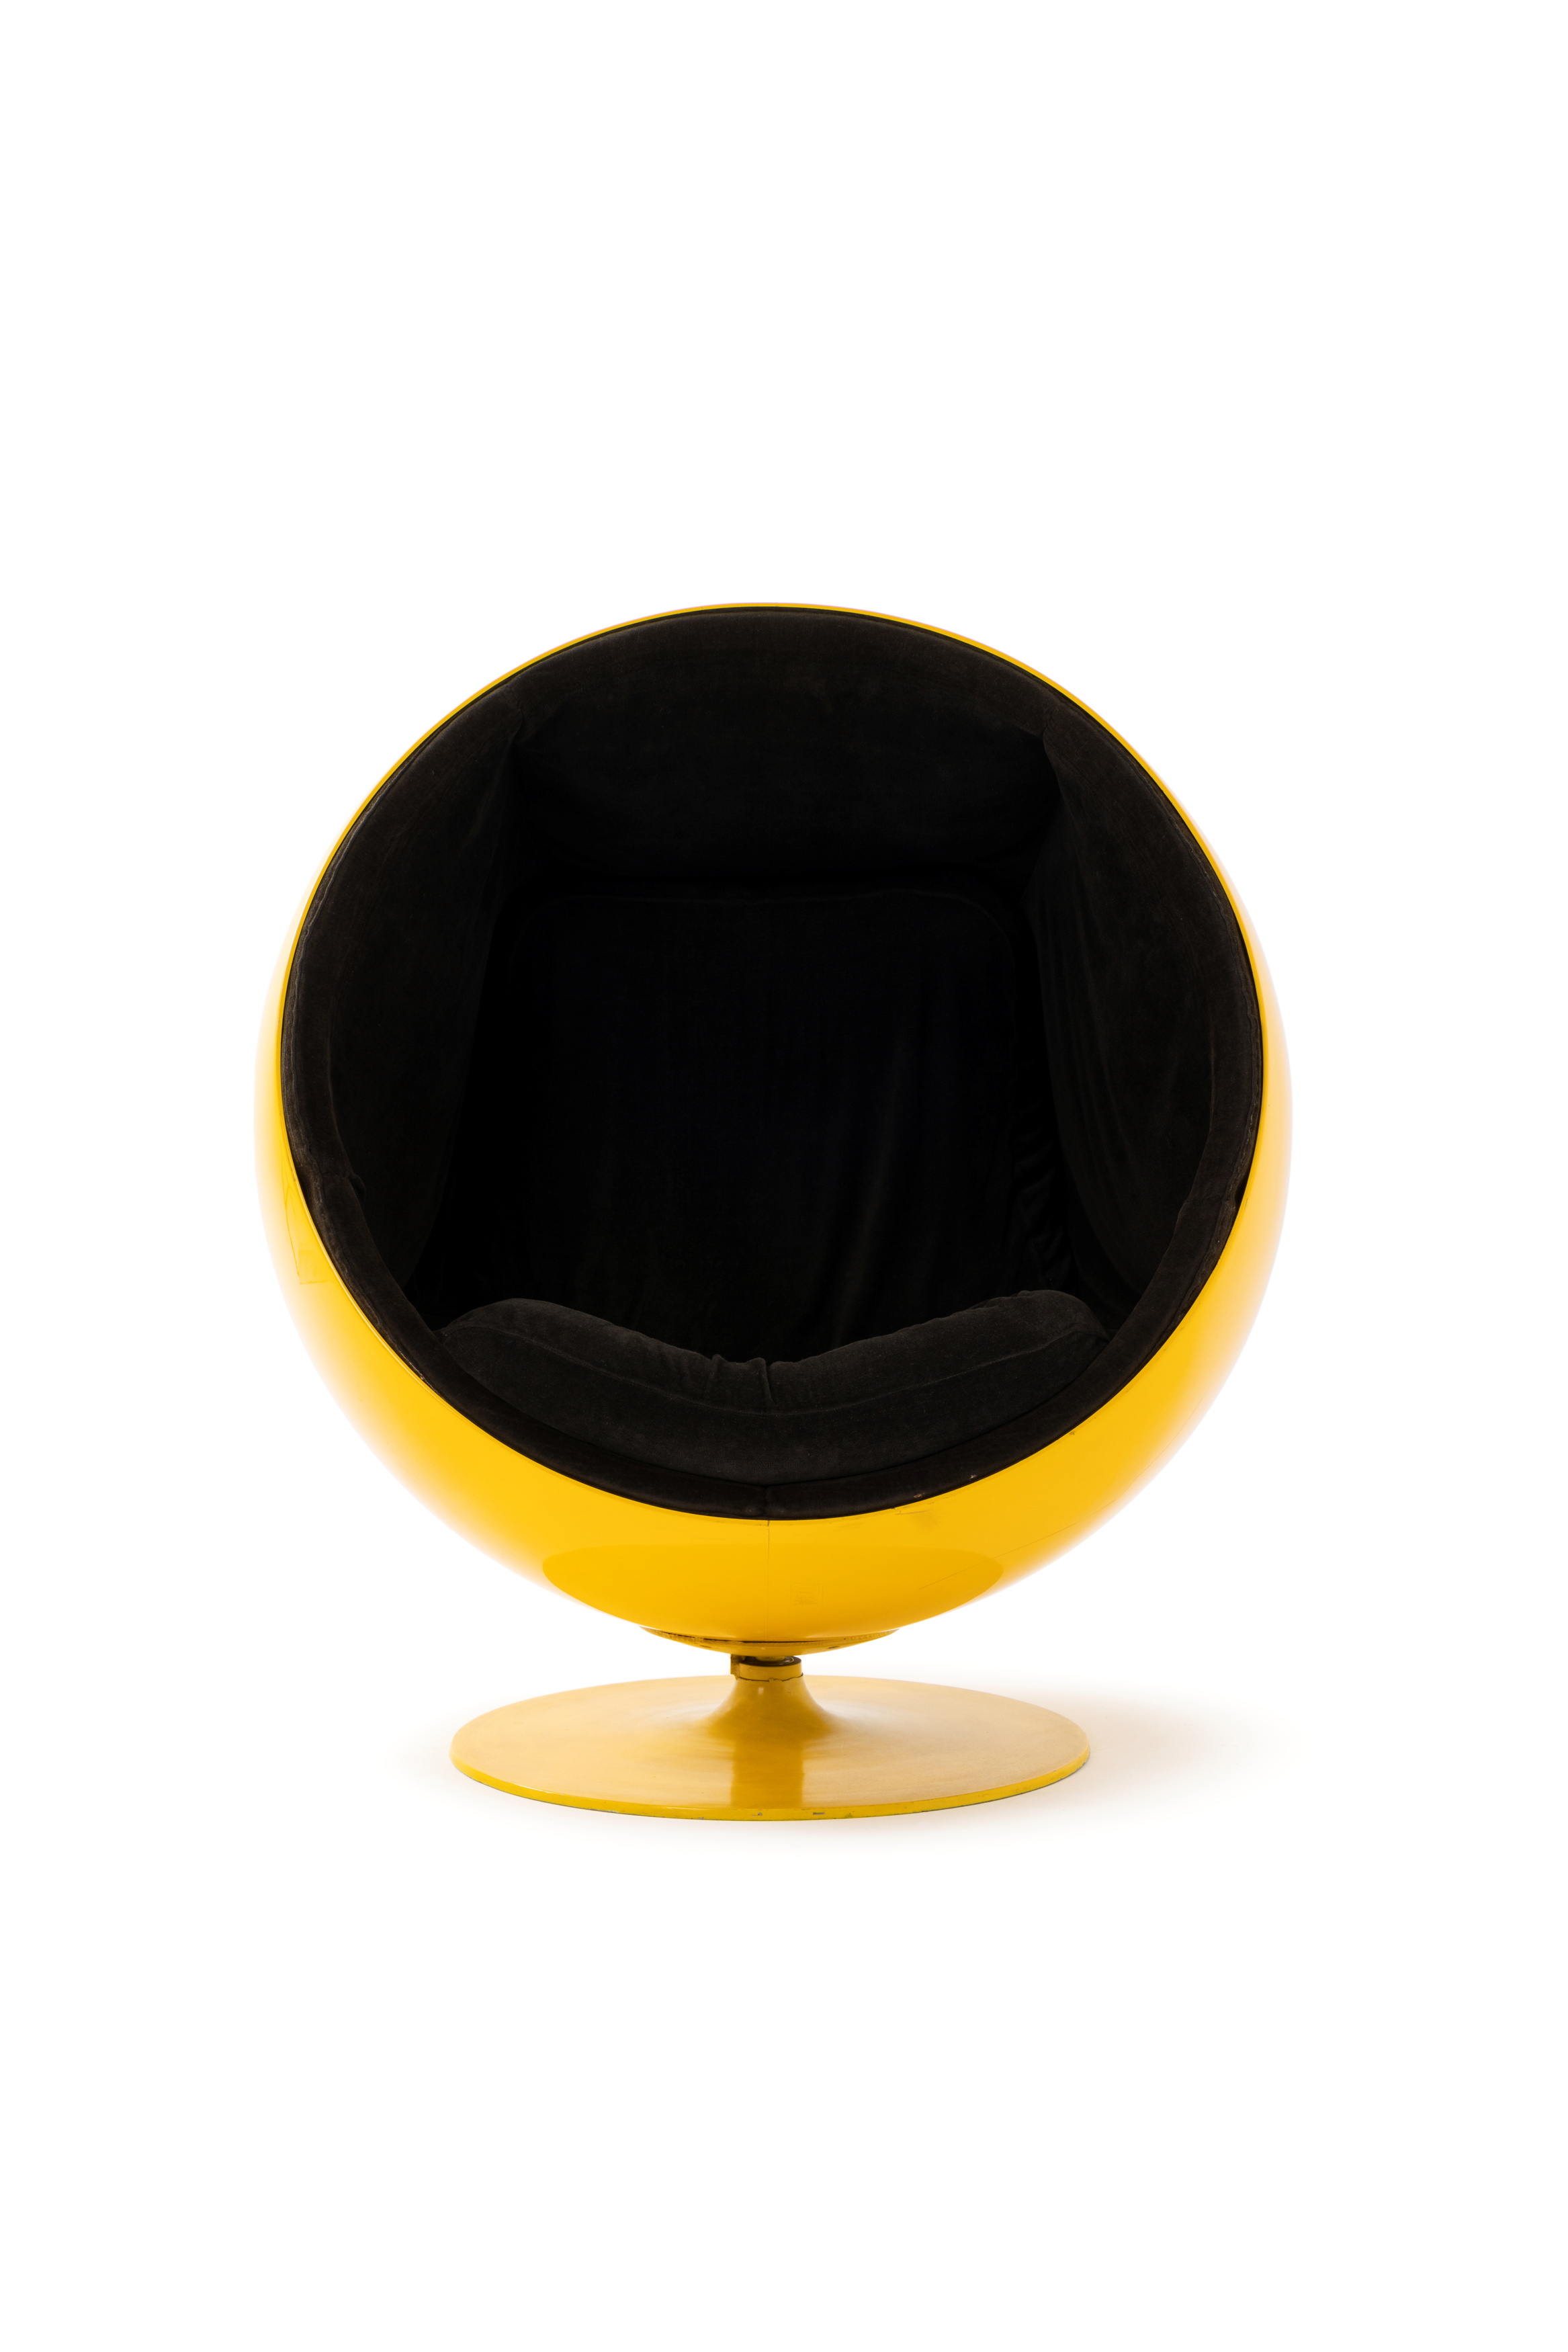 'Globe' armchair designed by Eero Aarnio